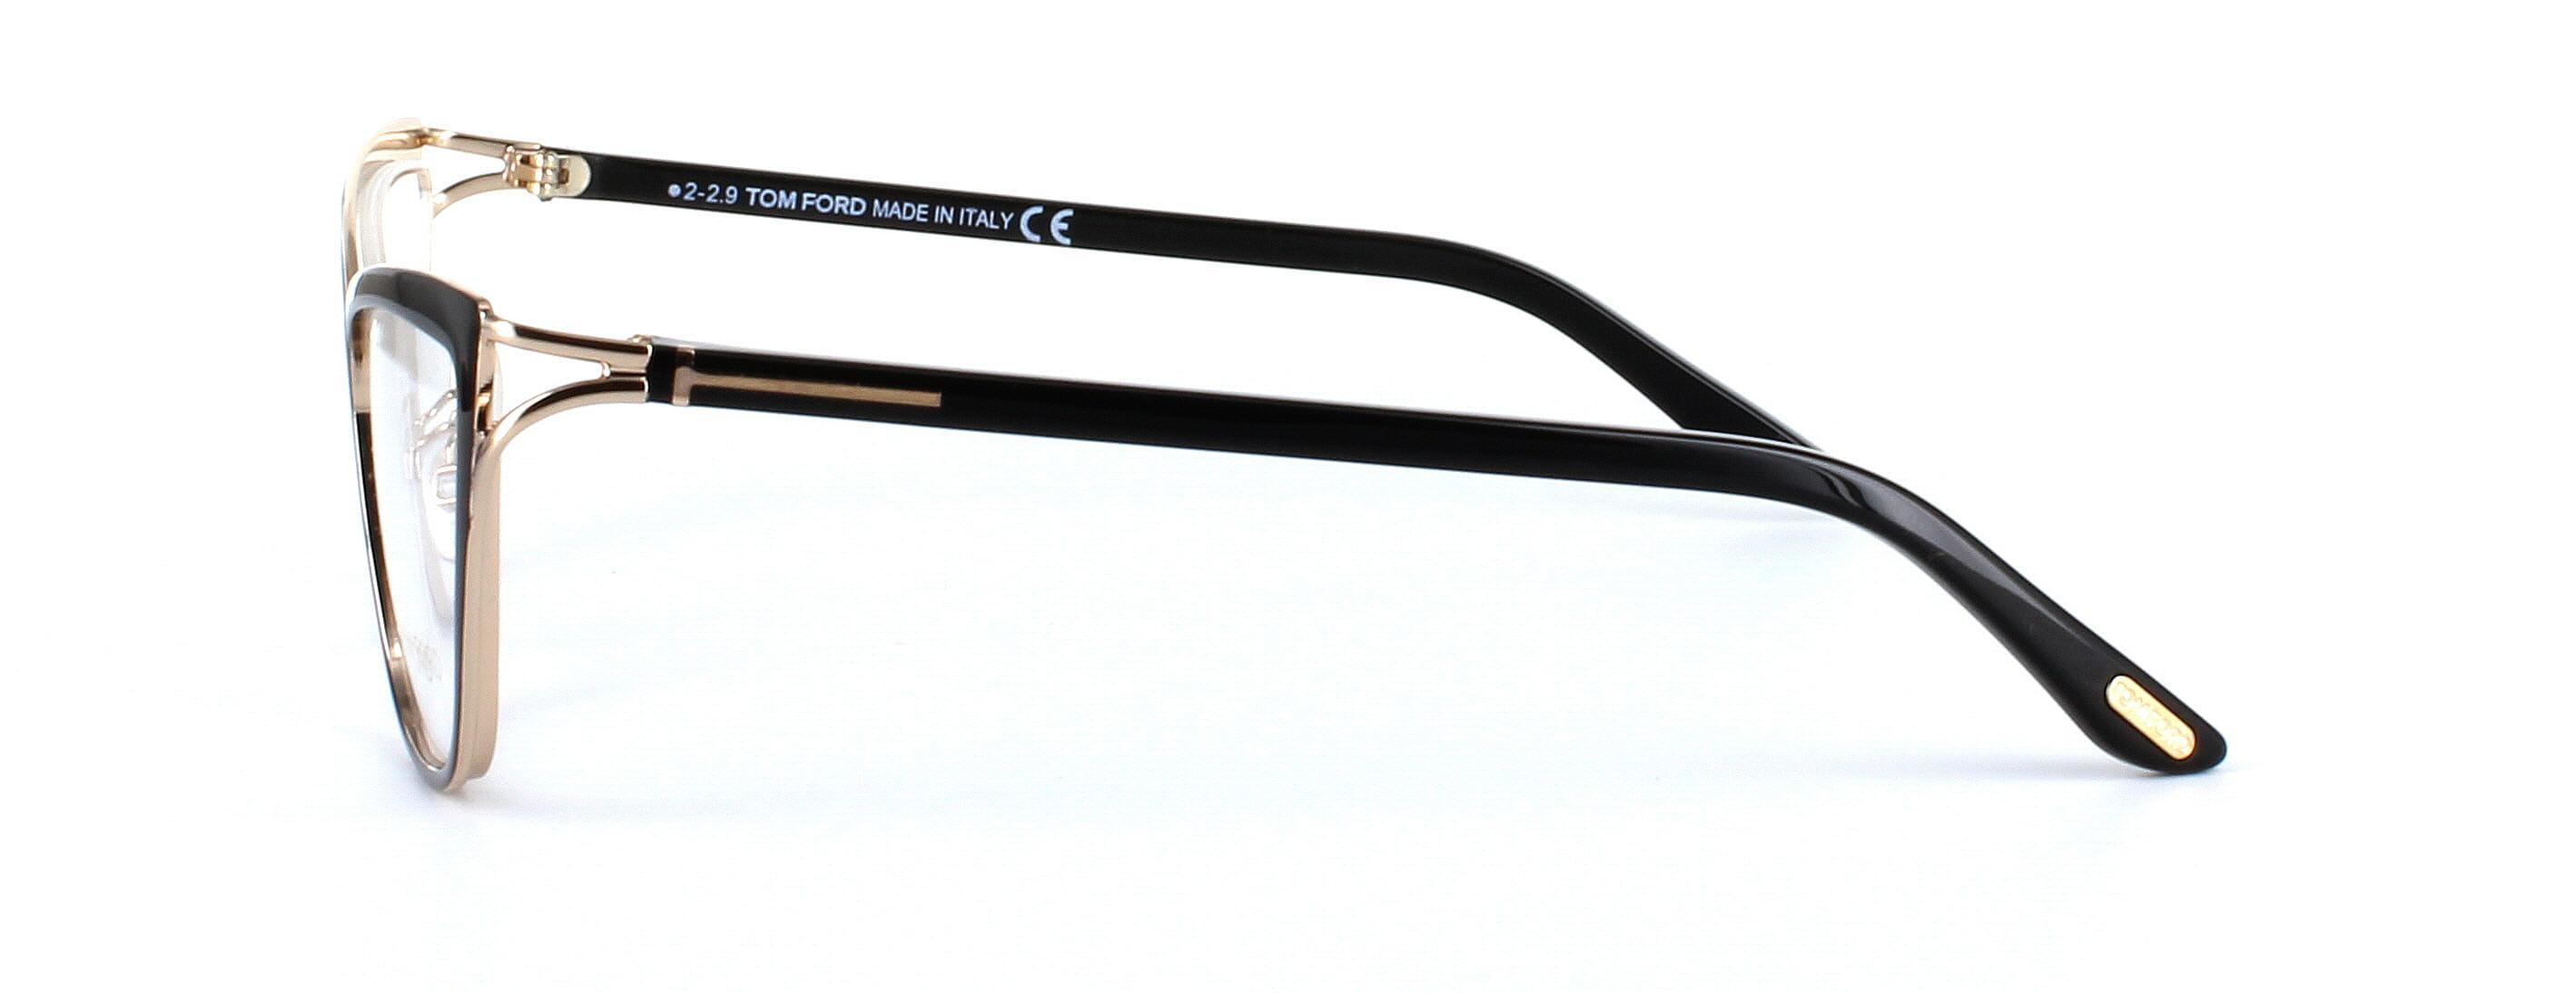 Ladies Tom Ford glasses - black & gold - image 2